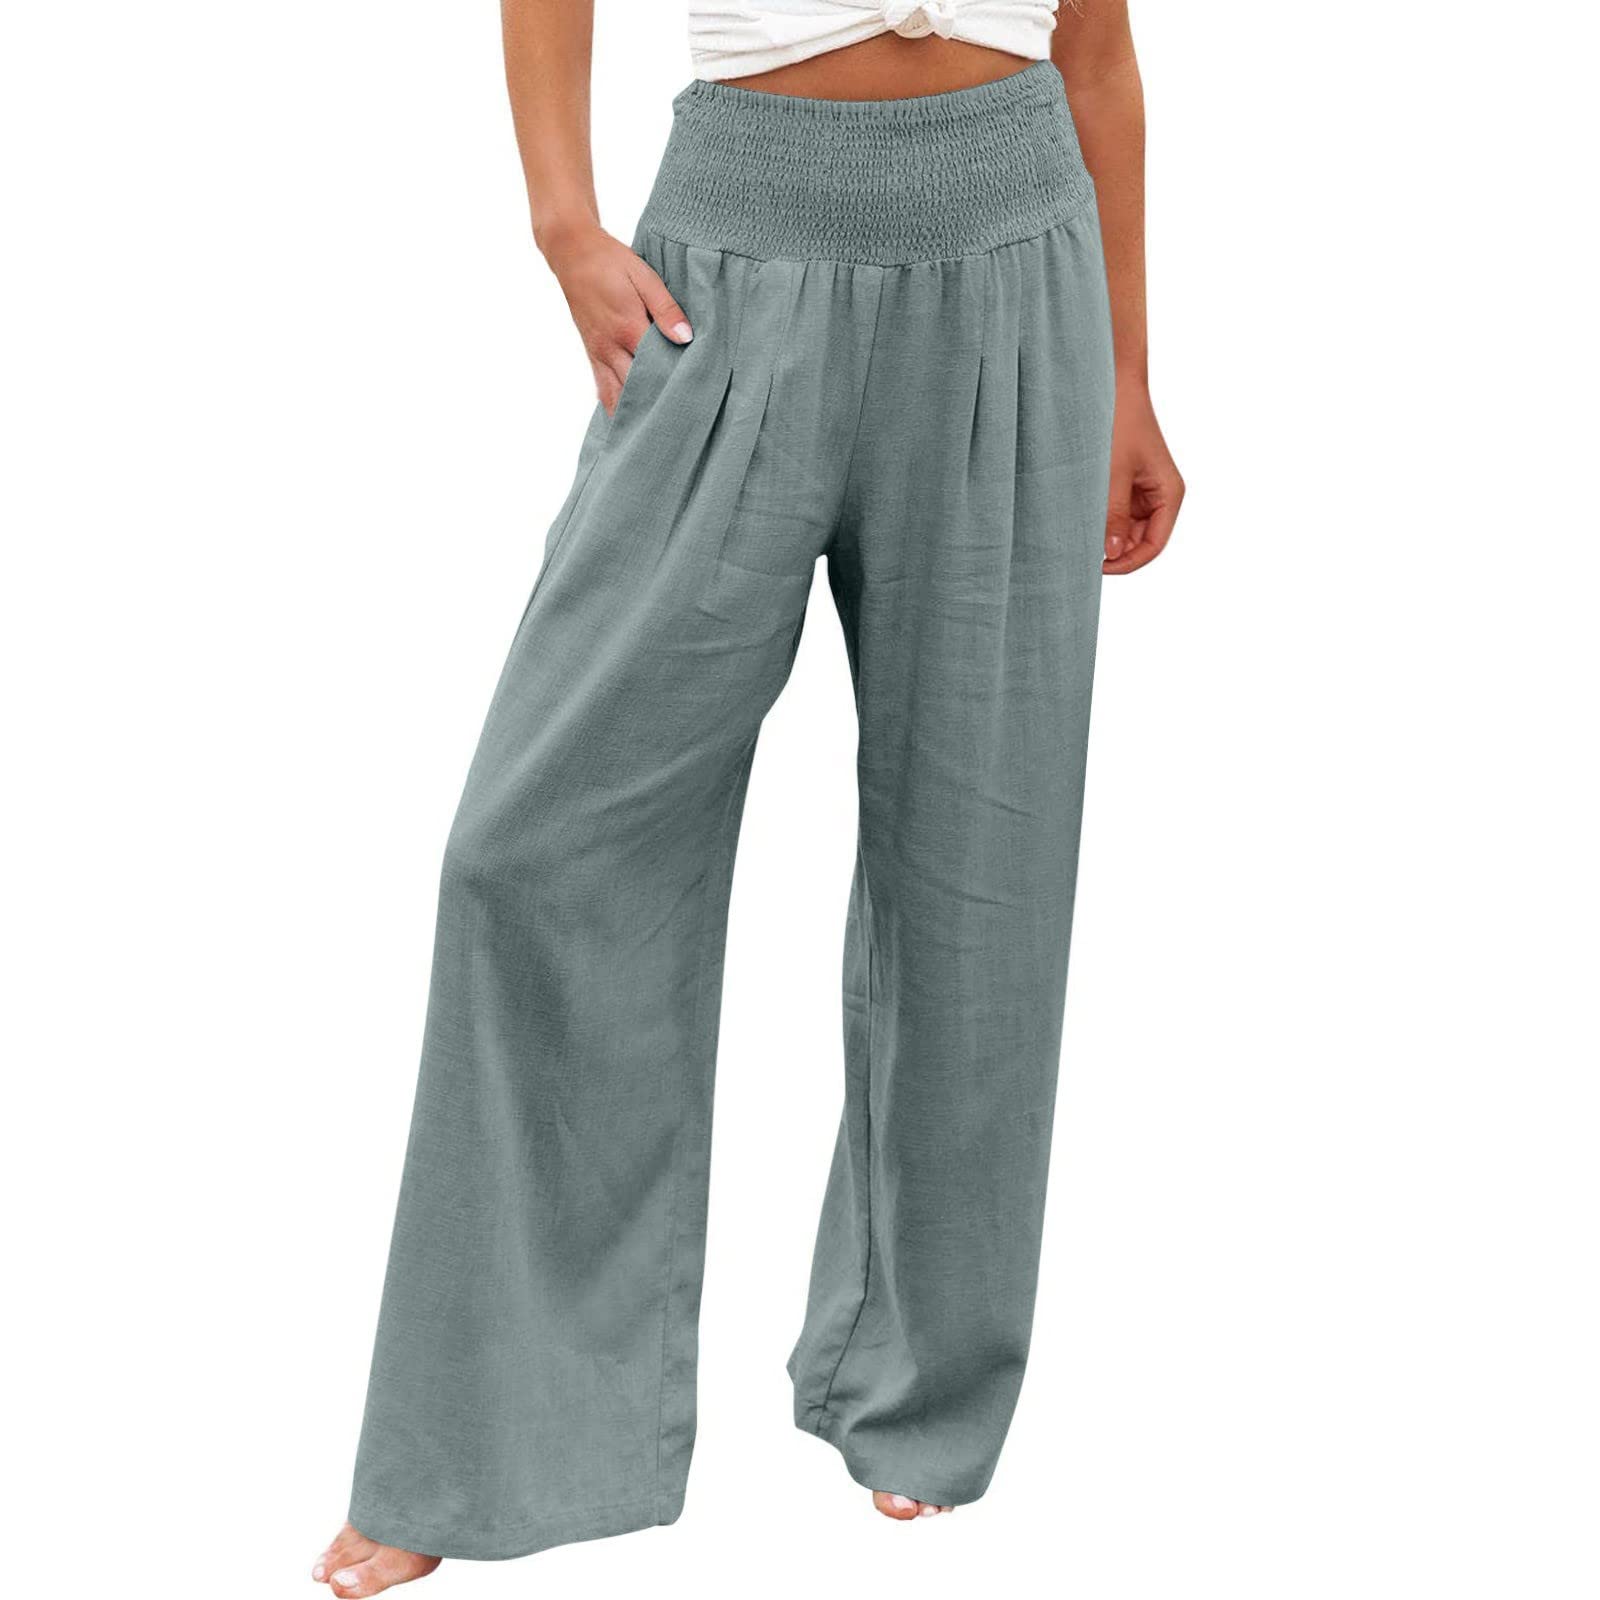 Cbcbtwo Linen Pants for Women,Summer Plus Size Elastic High